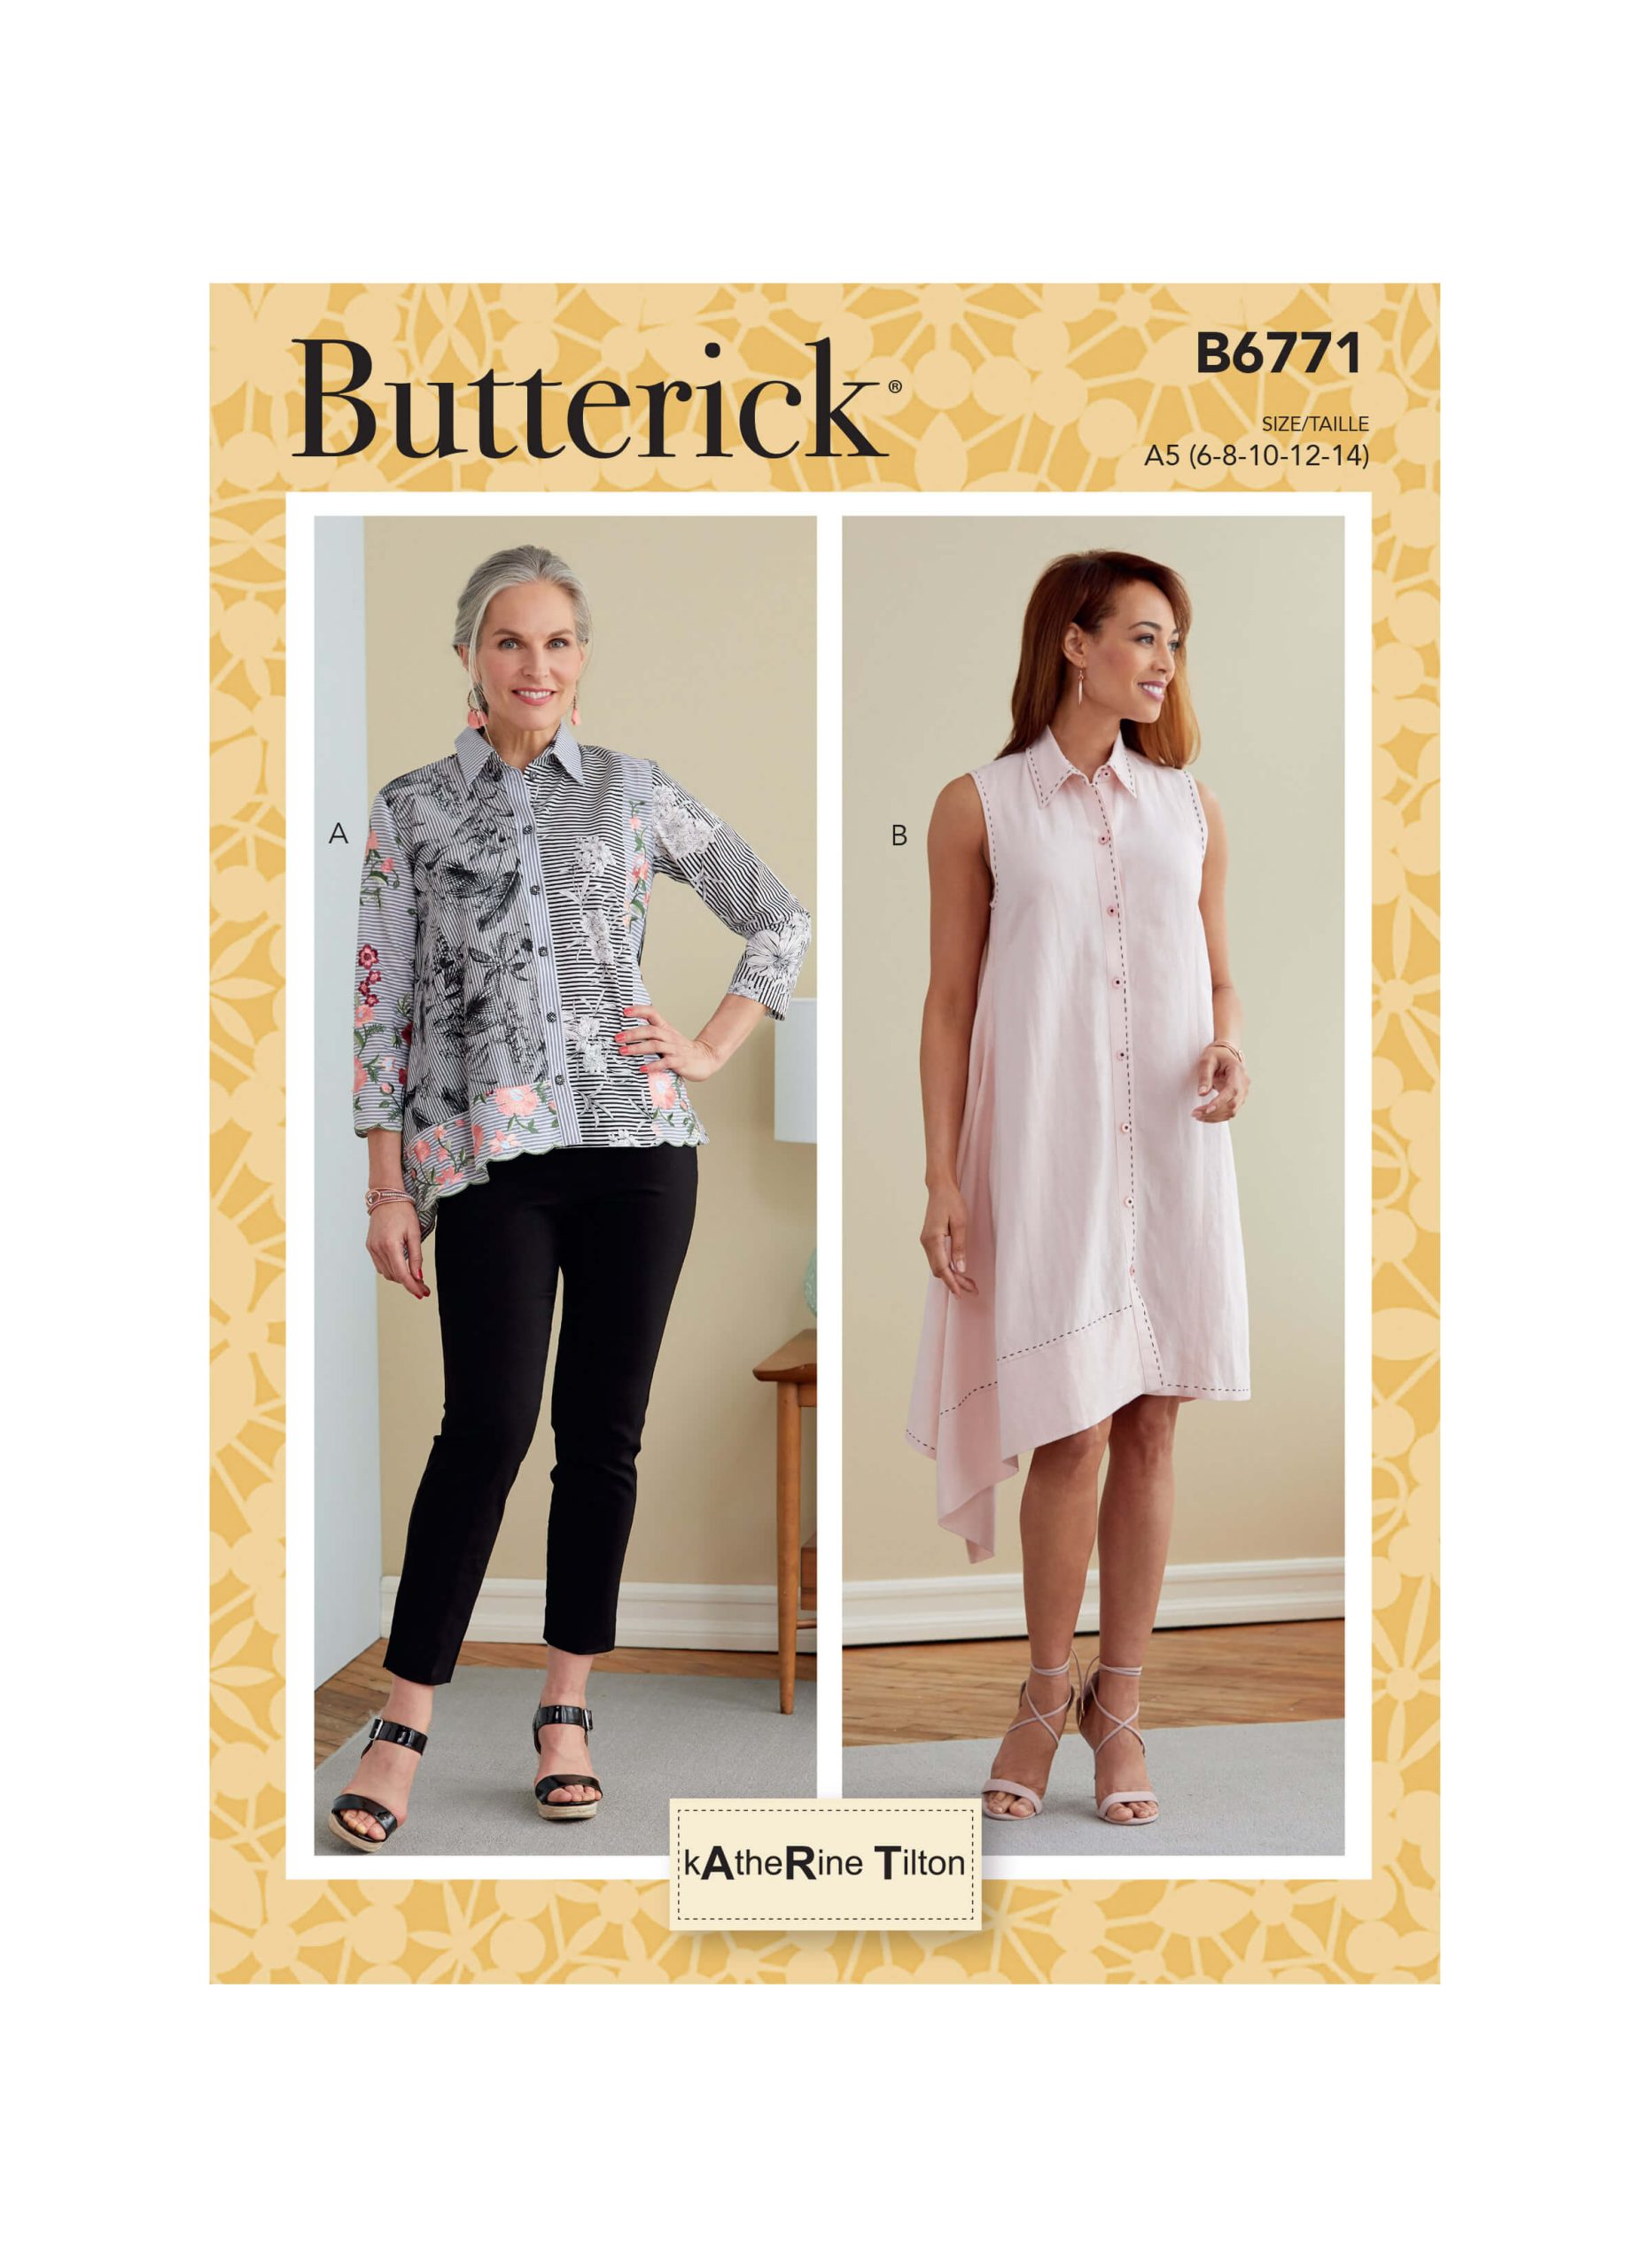 Butterick Sewing Pattern B6771 Misses' Shirt and Dress, Katherine Tilton